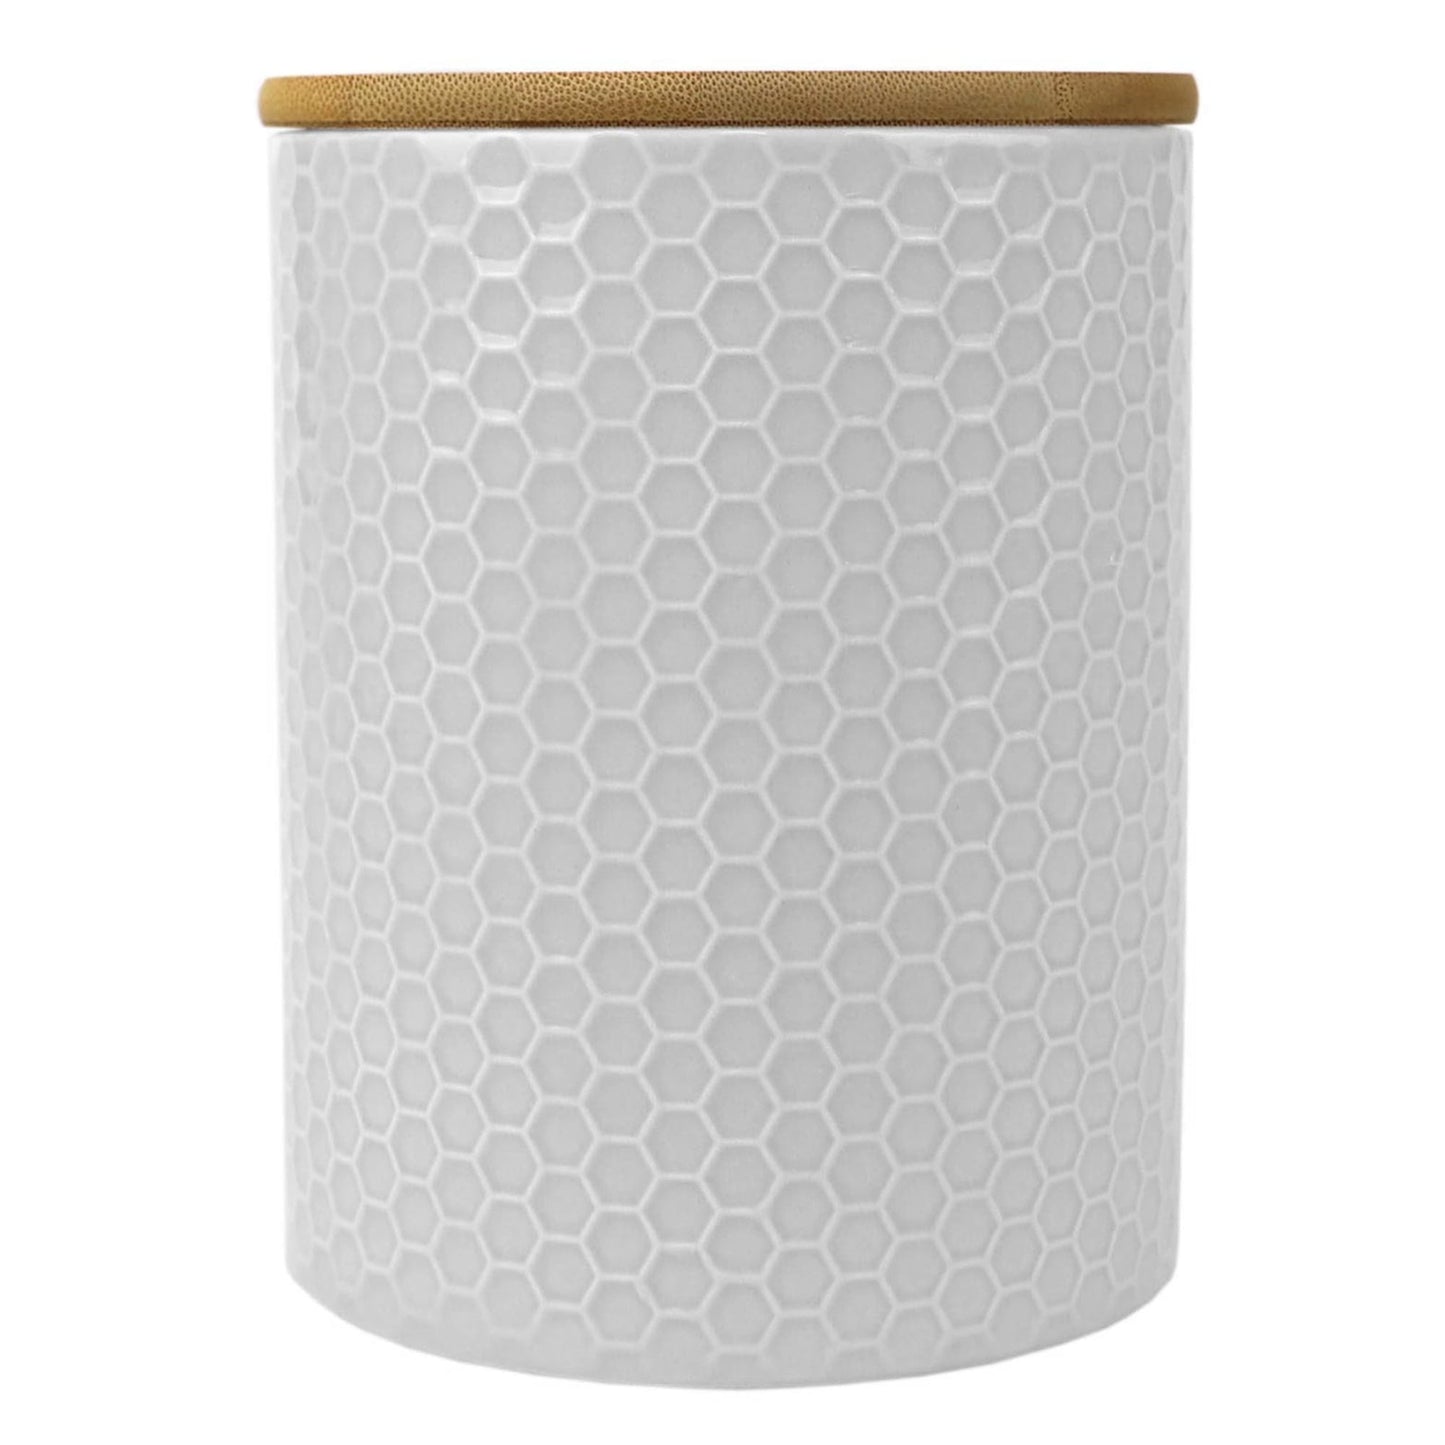 Honeycomb 3 Piece Ceramic Canister Set, White